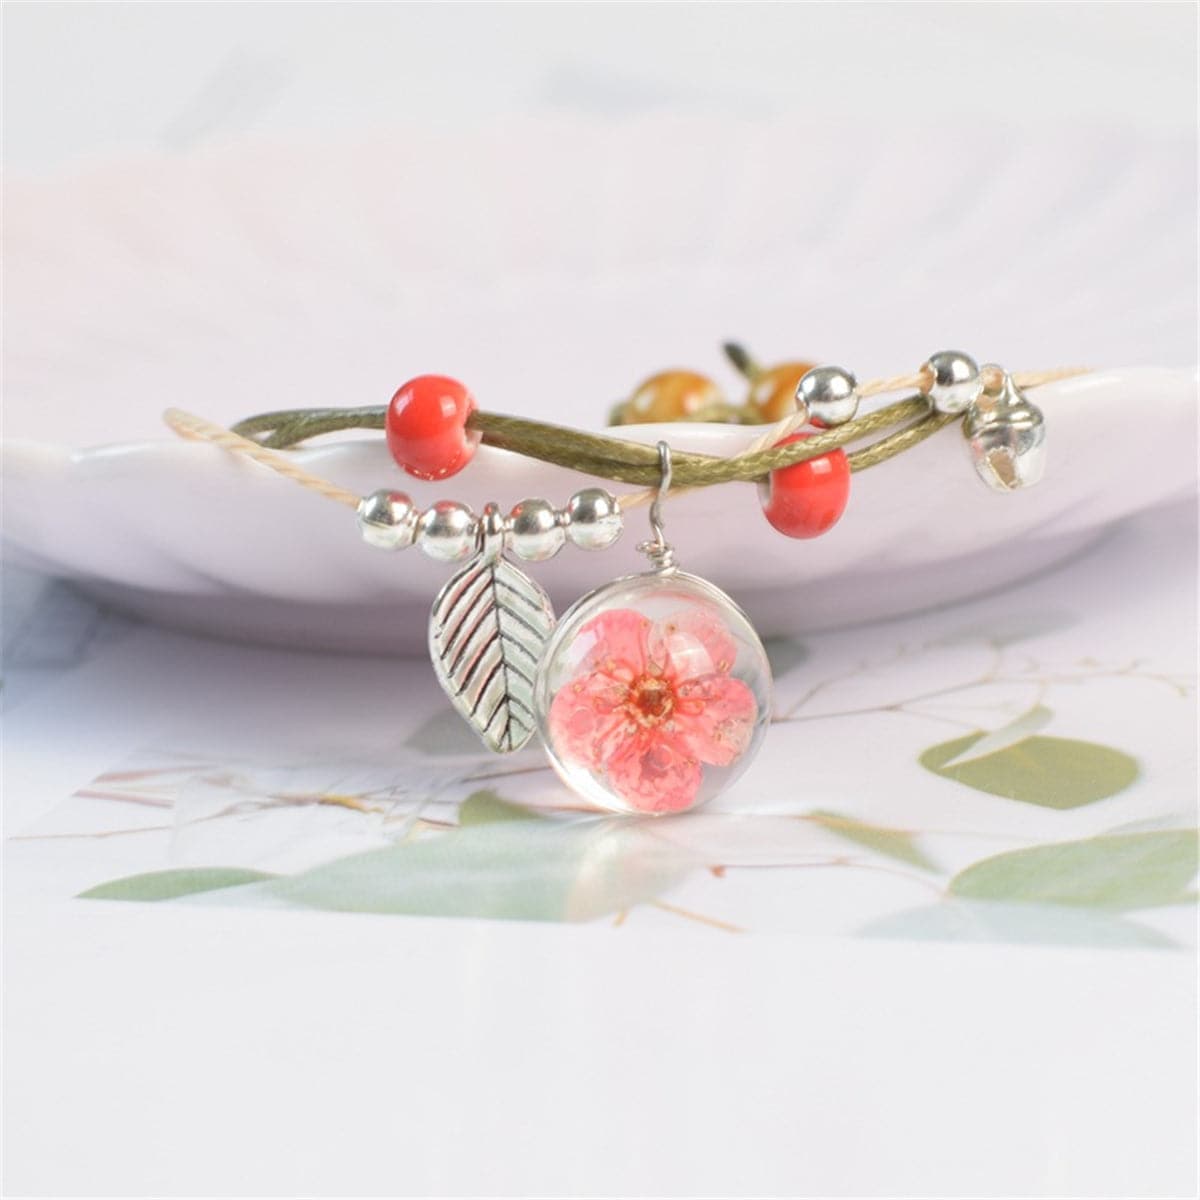 Ceramics & Red Peach Blossom Resin Bell Charm Bracelet